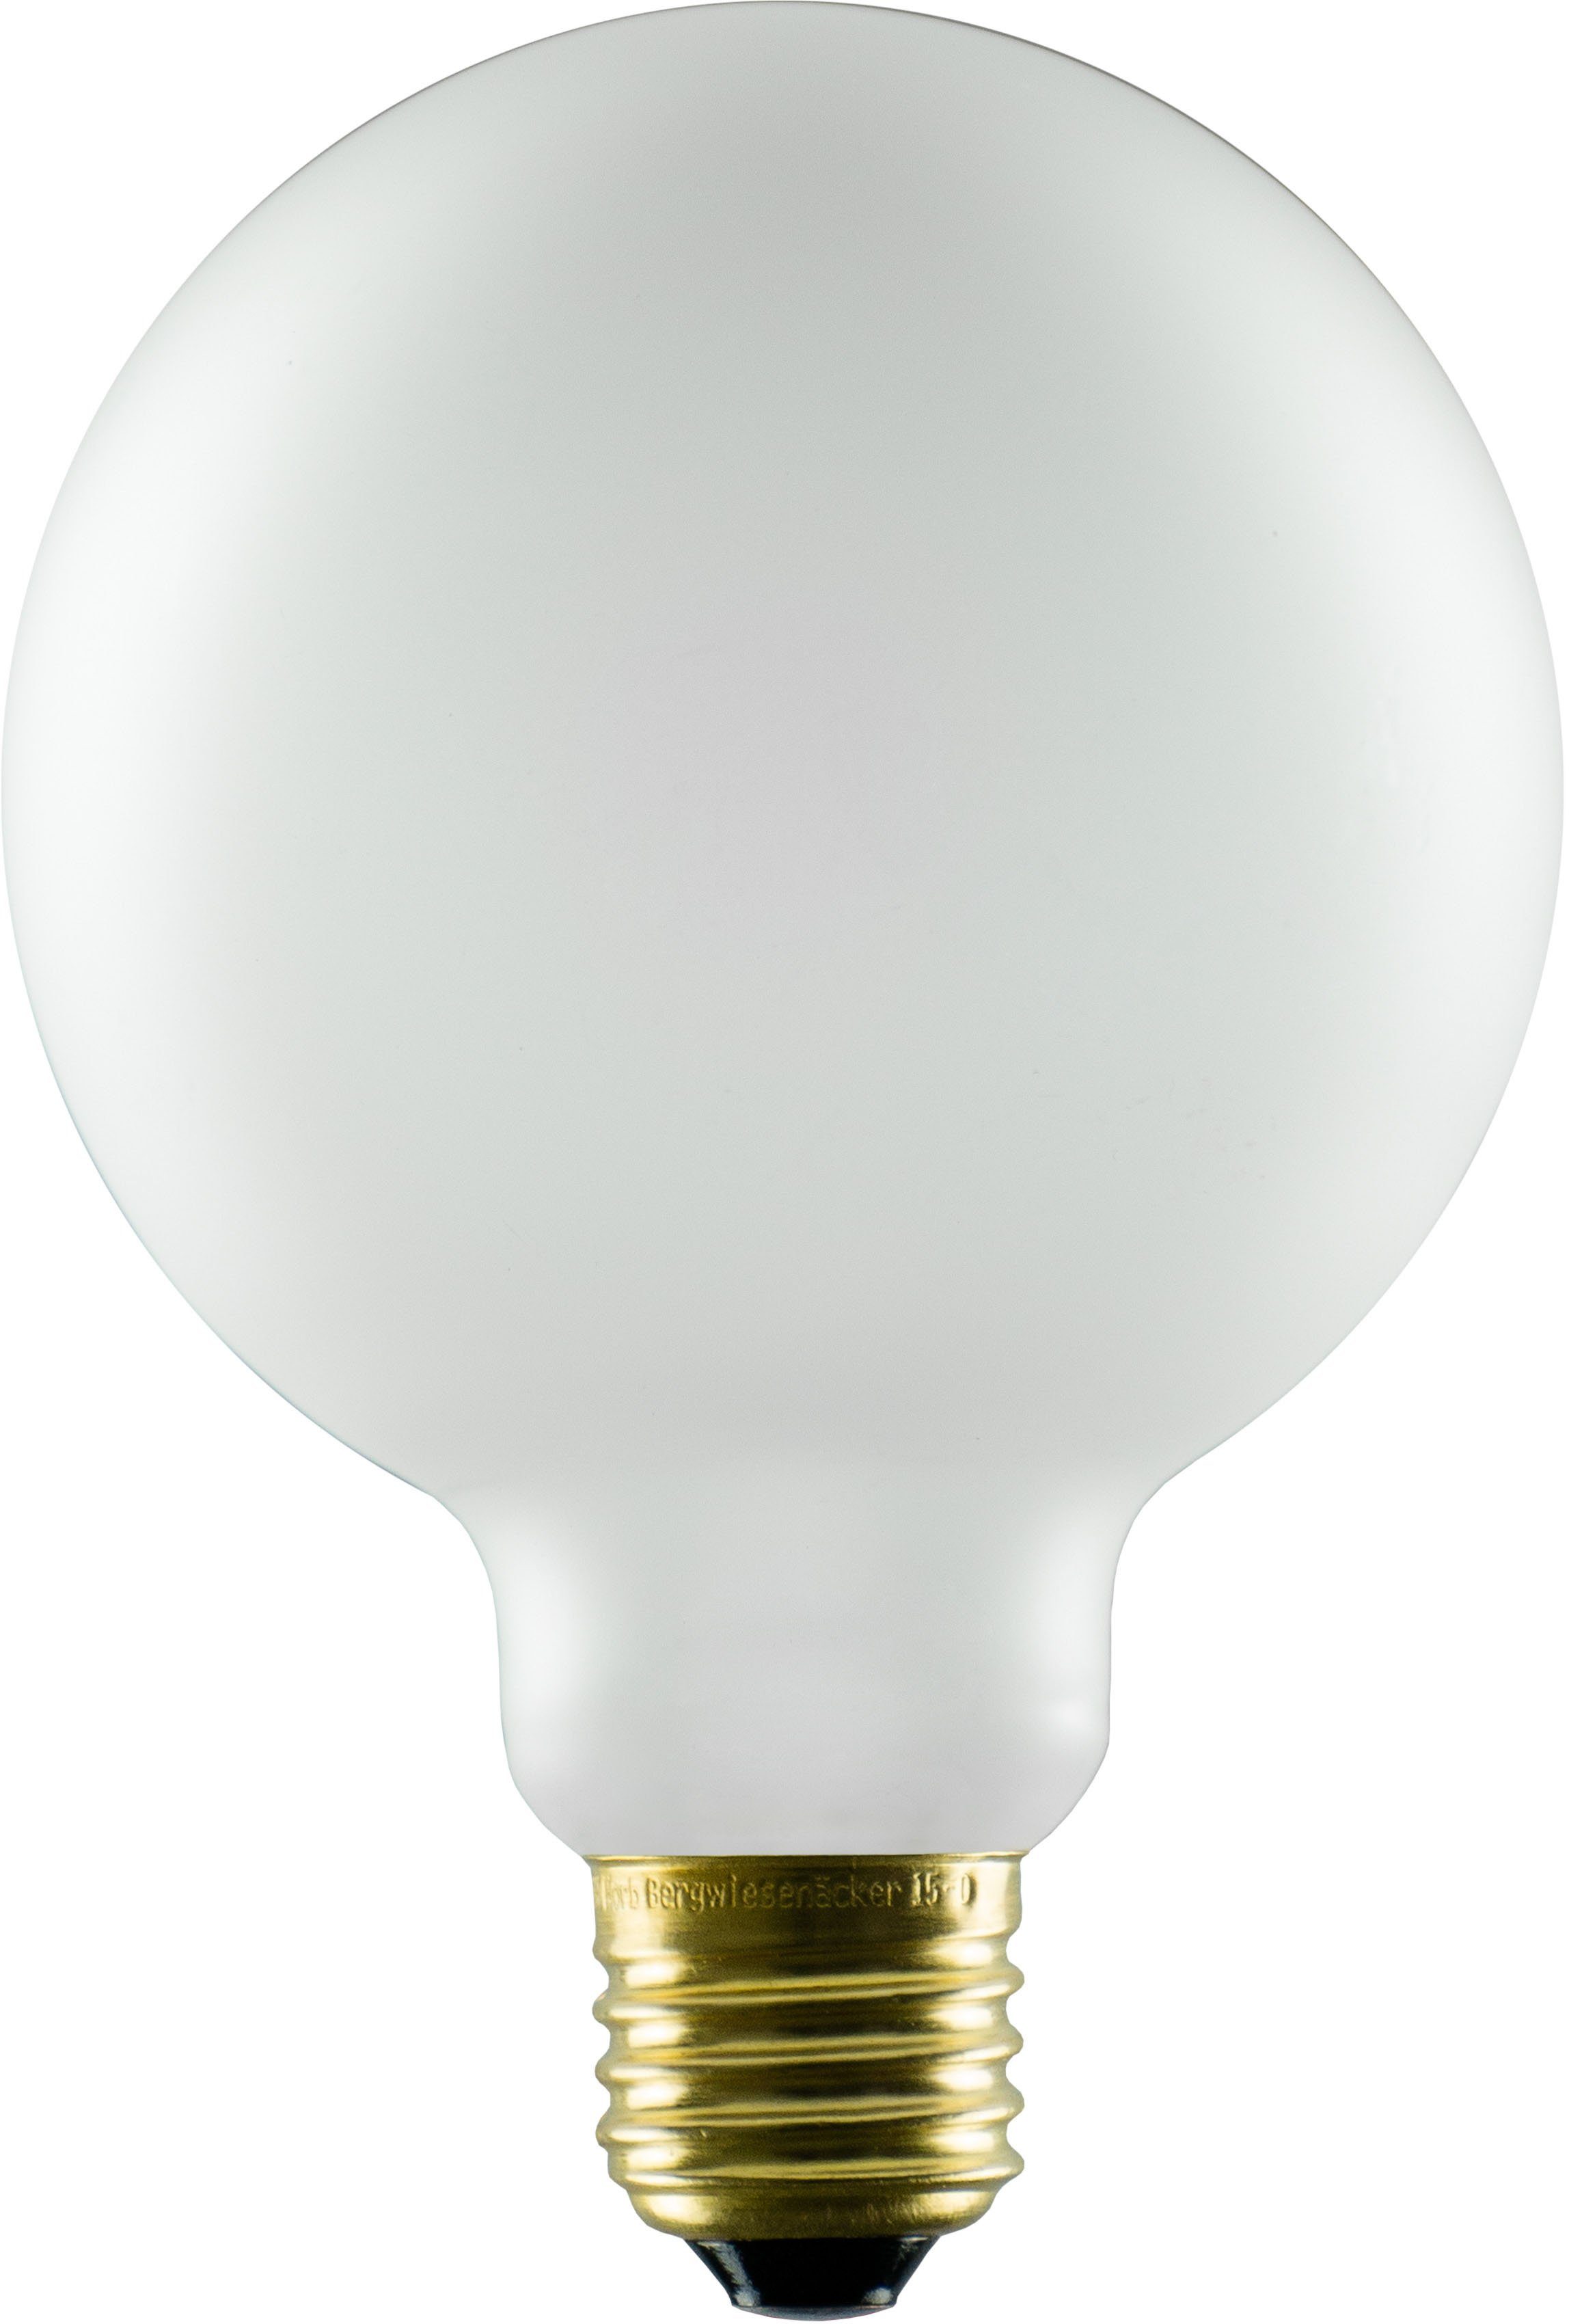 SEGULA Globe satiniert, 95 E27, LED Globe LED-Leuchtmittel E27, 95, Warmweiß, dimmbar, satiniert